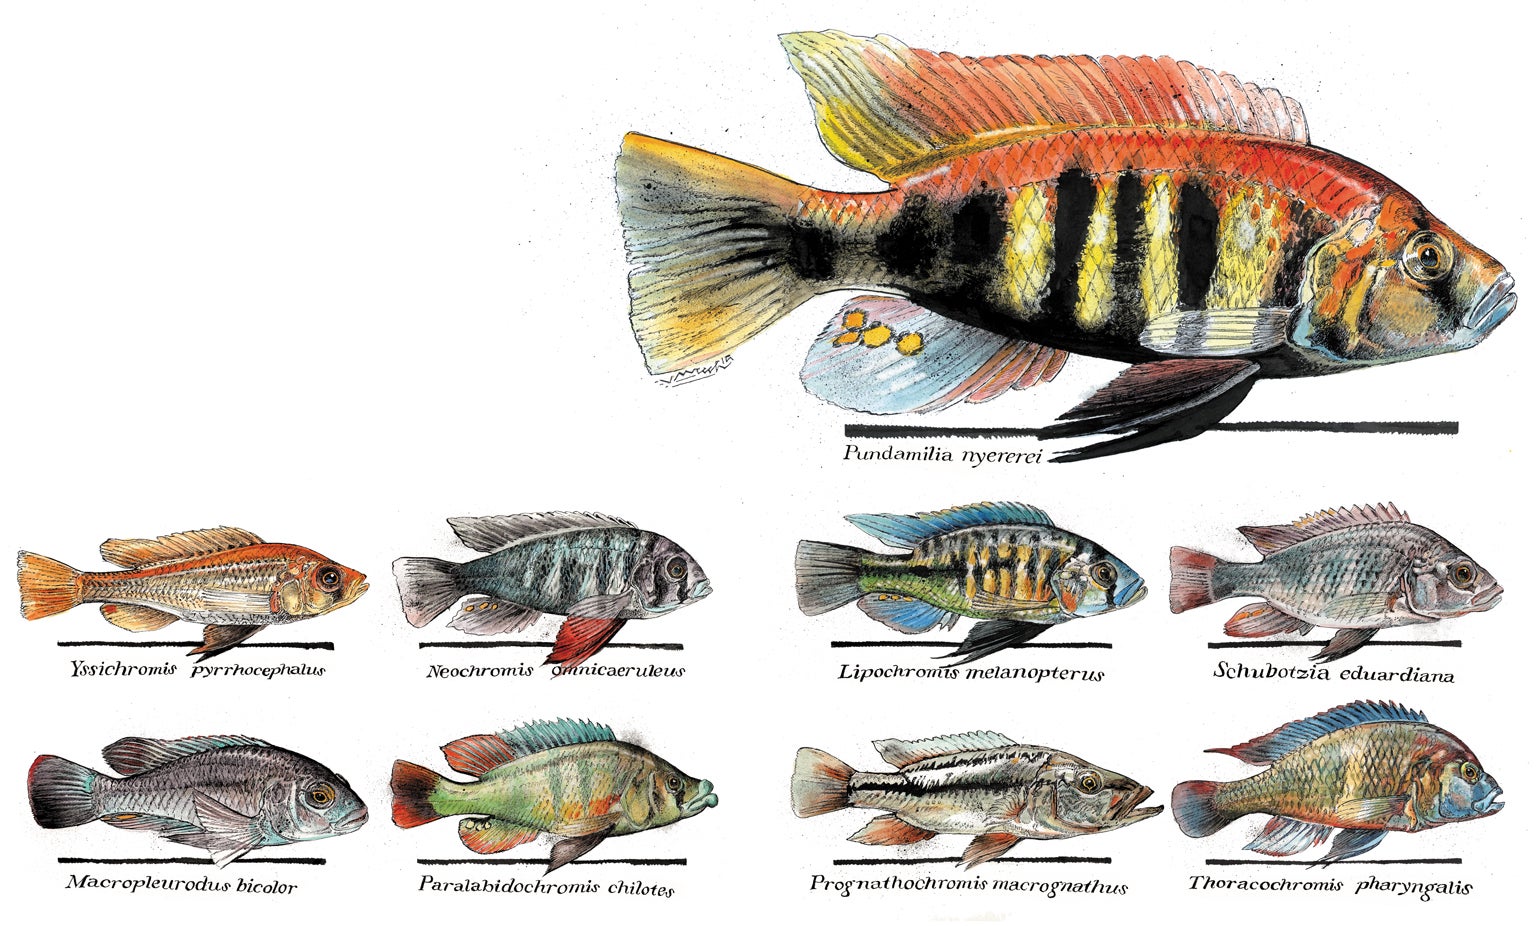 Big fish are getting smaller - University of Victoria